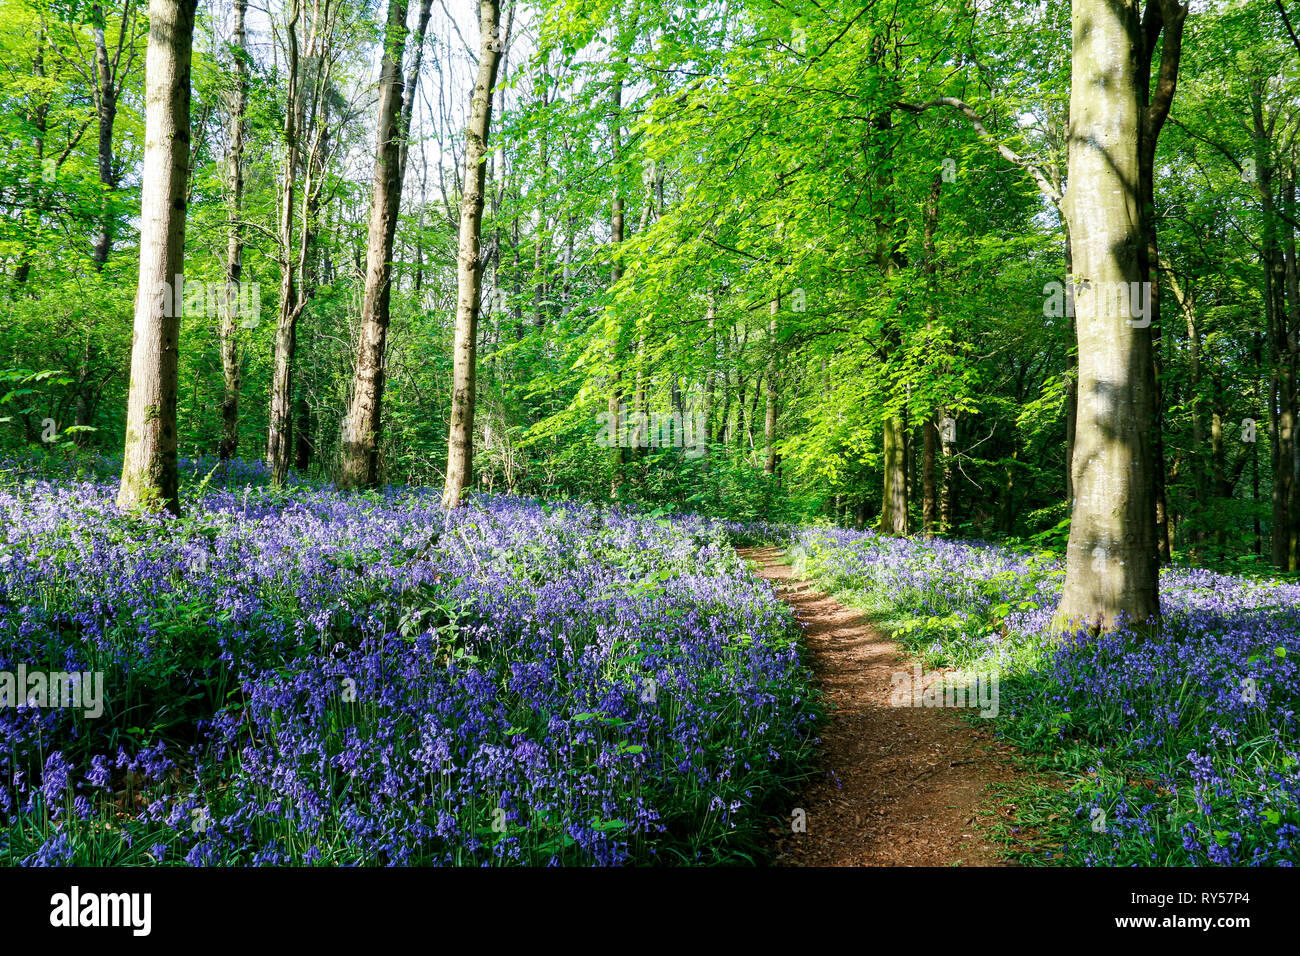 Path through bluebell wood at Portglenone, Northern Ireland with dappled sunlight shining through trees Stock Photo